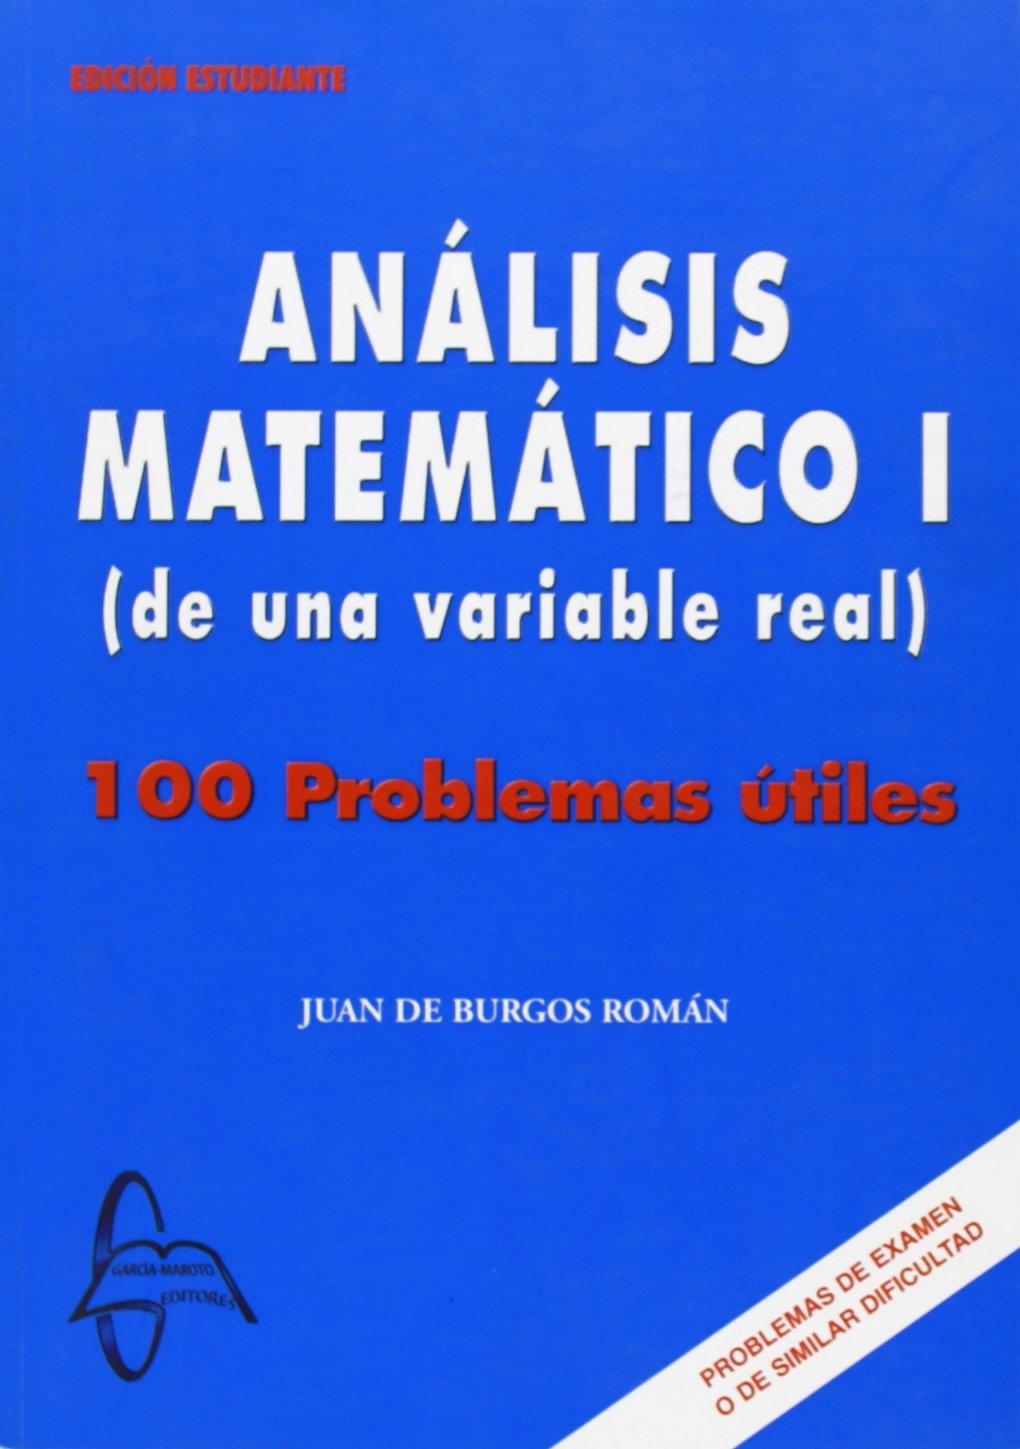 ANÁLISIS MATEMÁTICO I "100 PROBLEMAS ÚTILES"